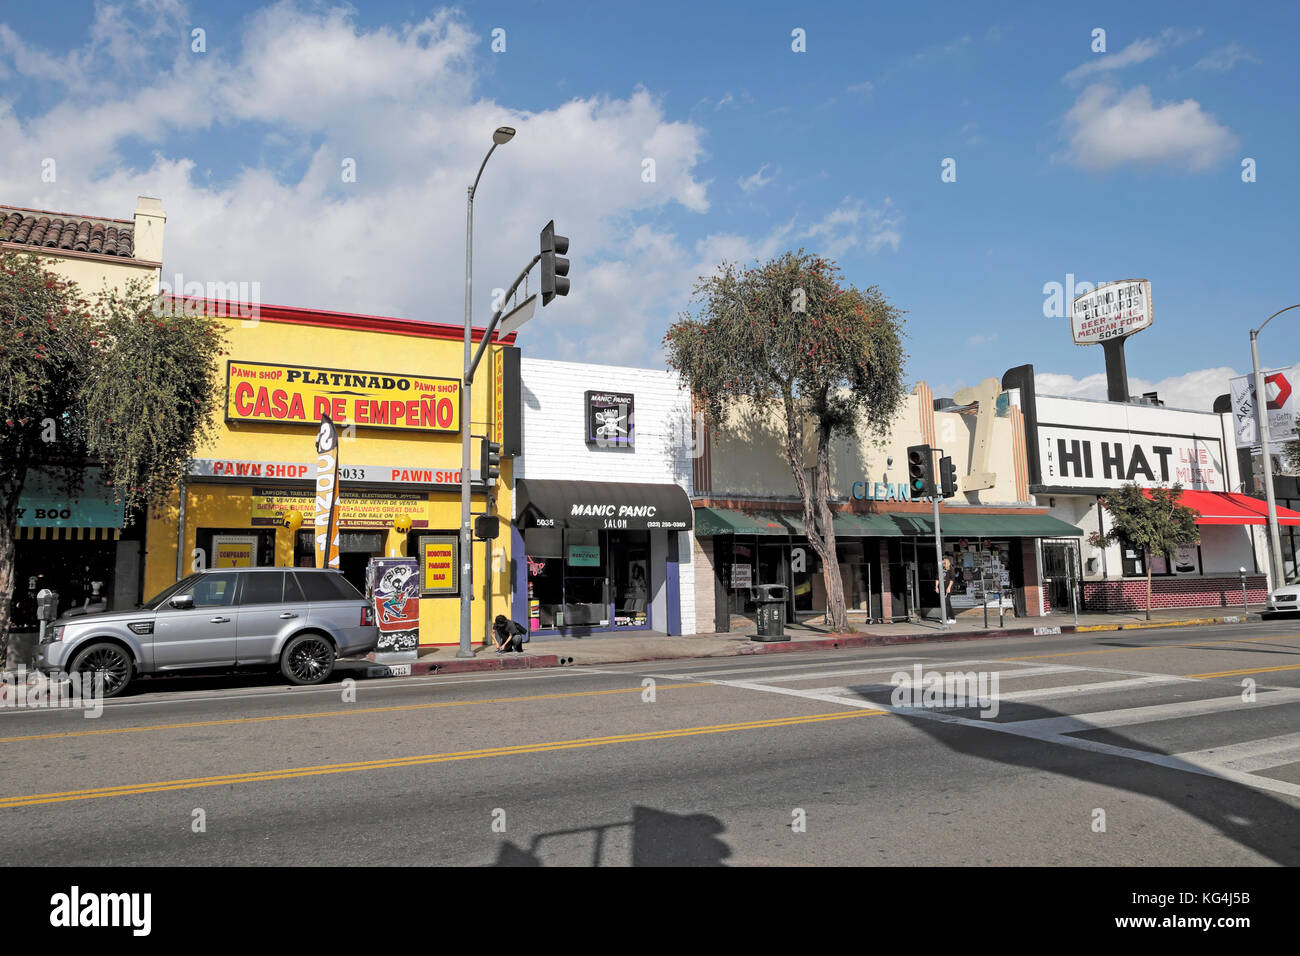 Stores, pawnshop casa de empeño,The Hi Hat music venue, Urchin on York Boulevard in trendy Highland Park, Los Angeles, California, USA    KATHY DEWIT Stock Photo